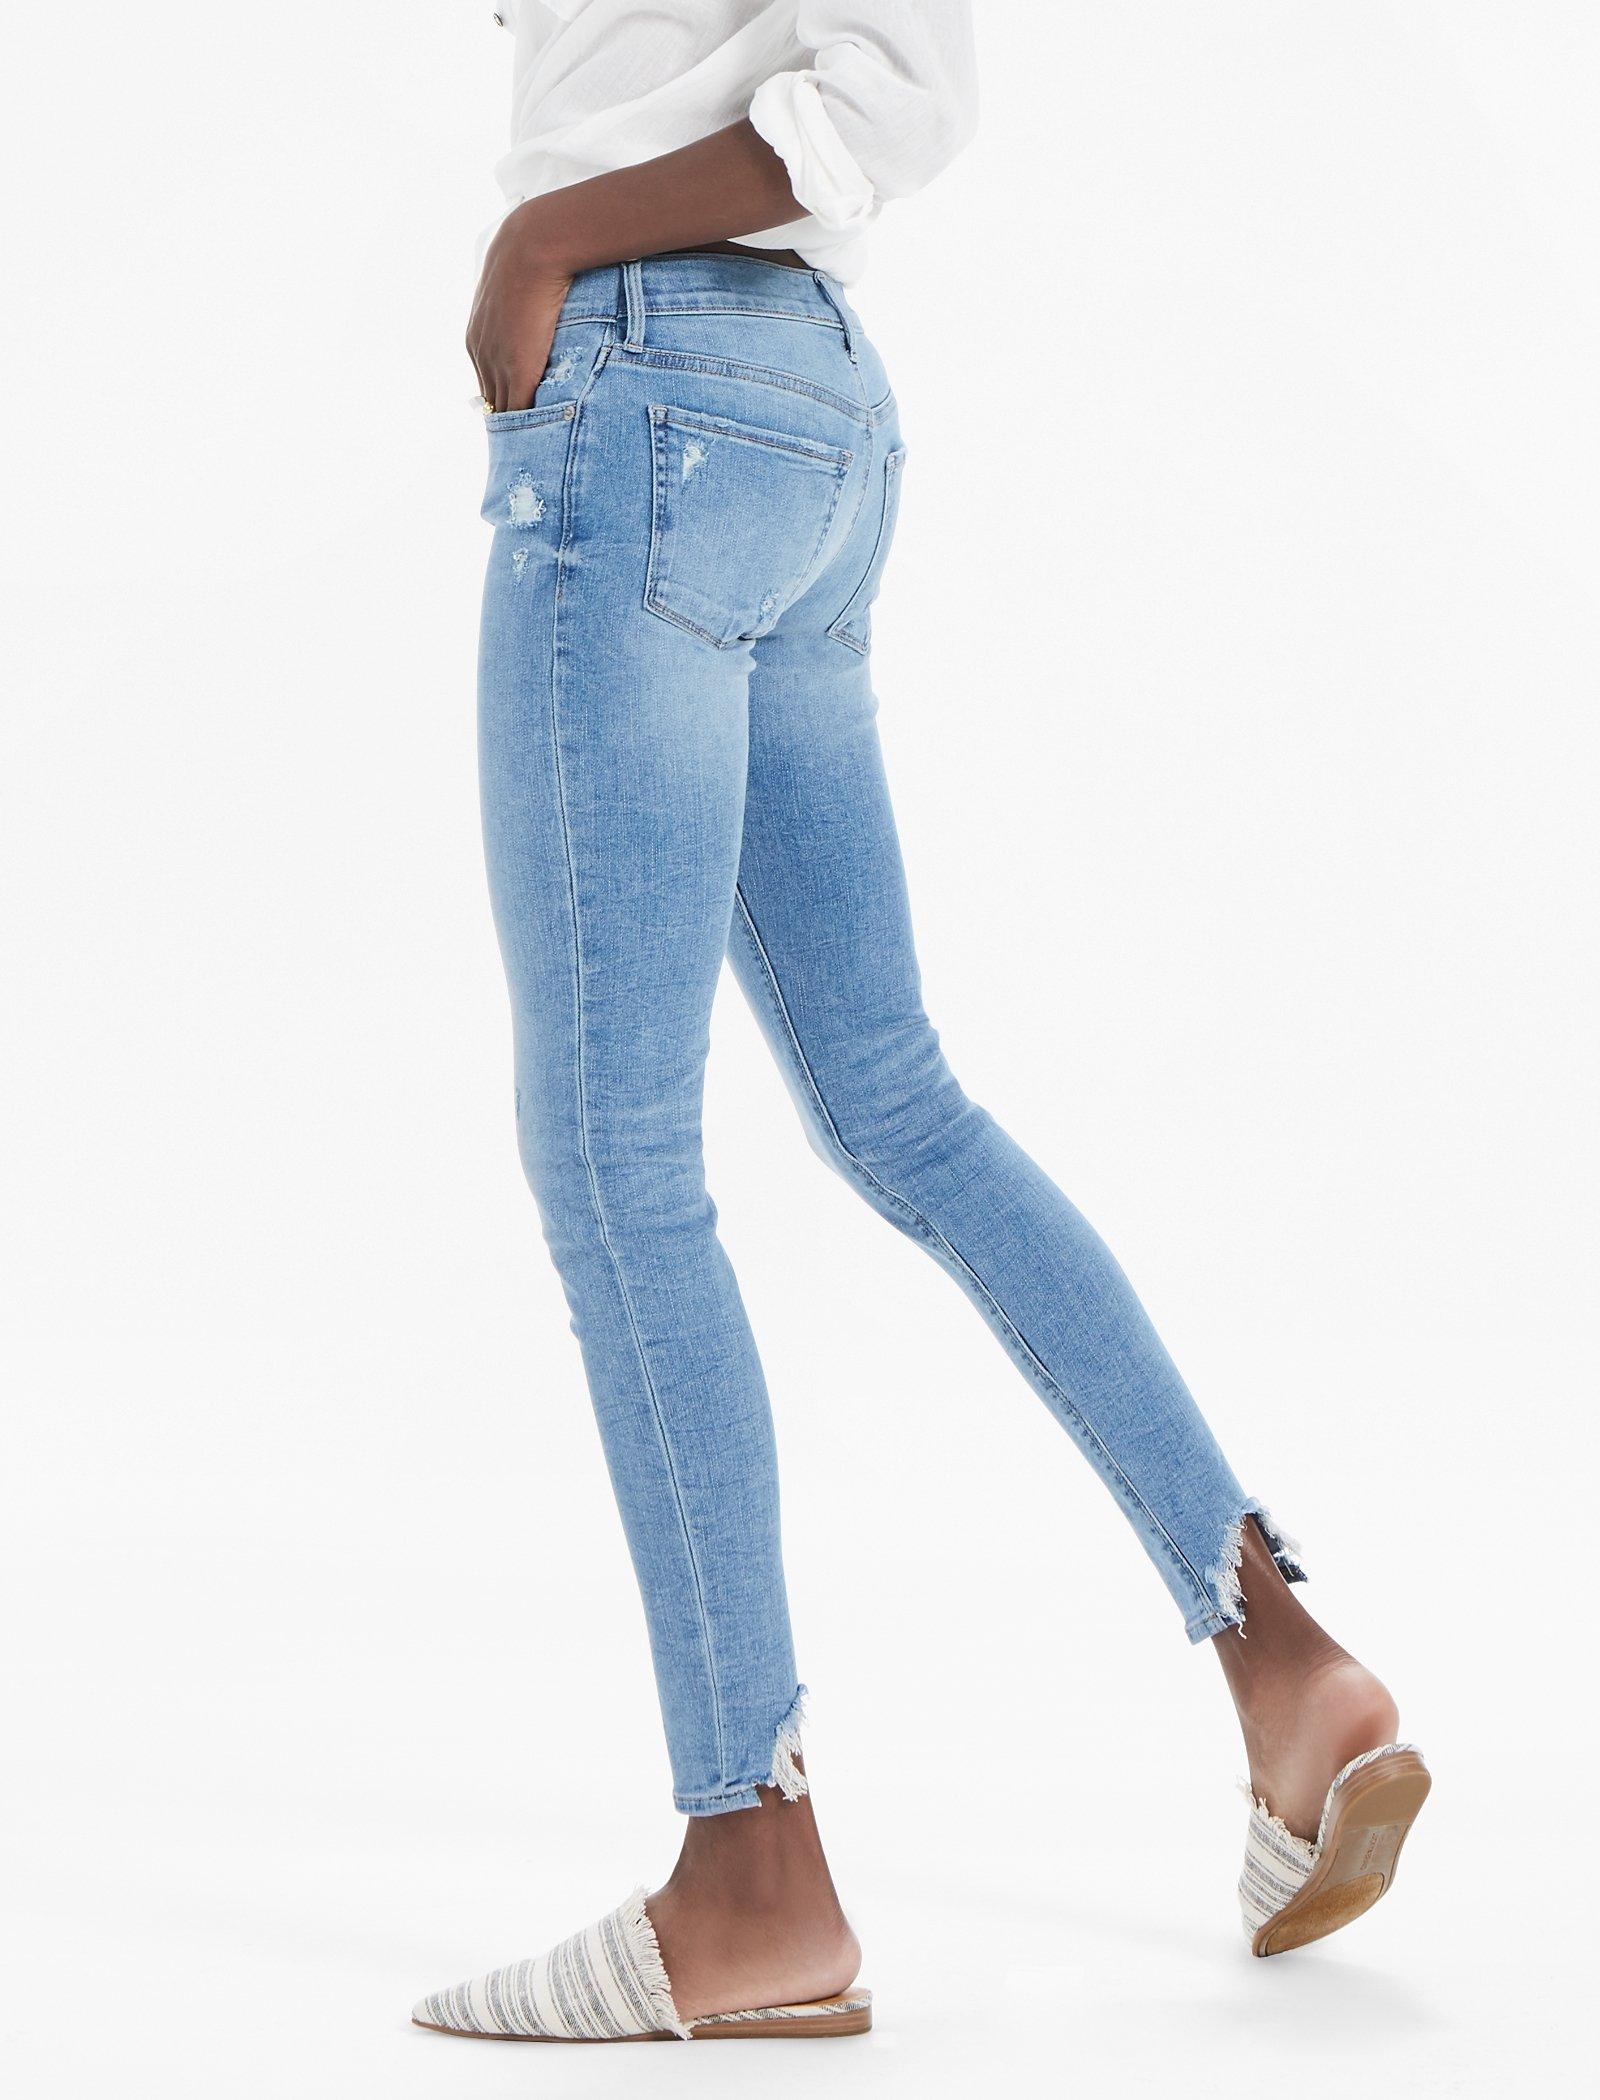 lucky brooke legging jean